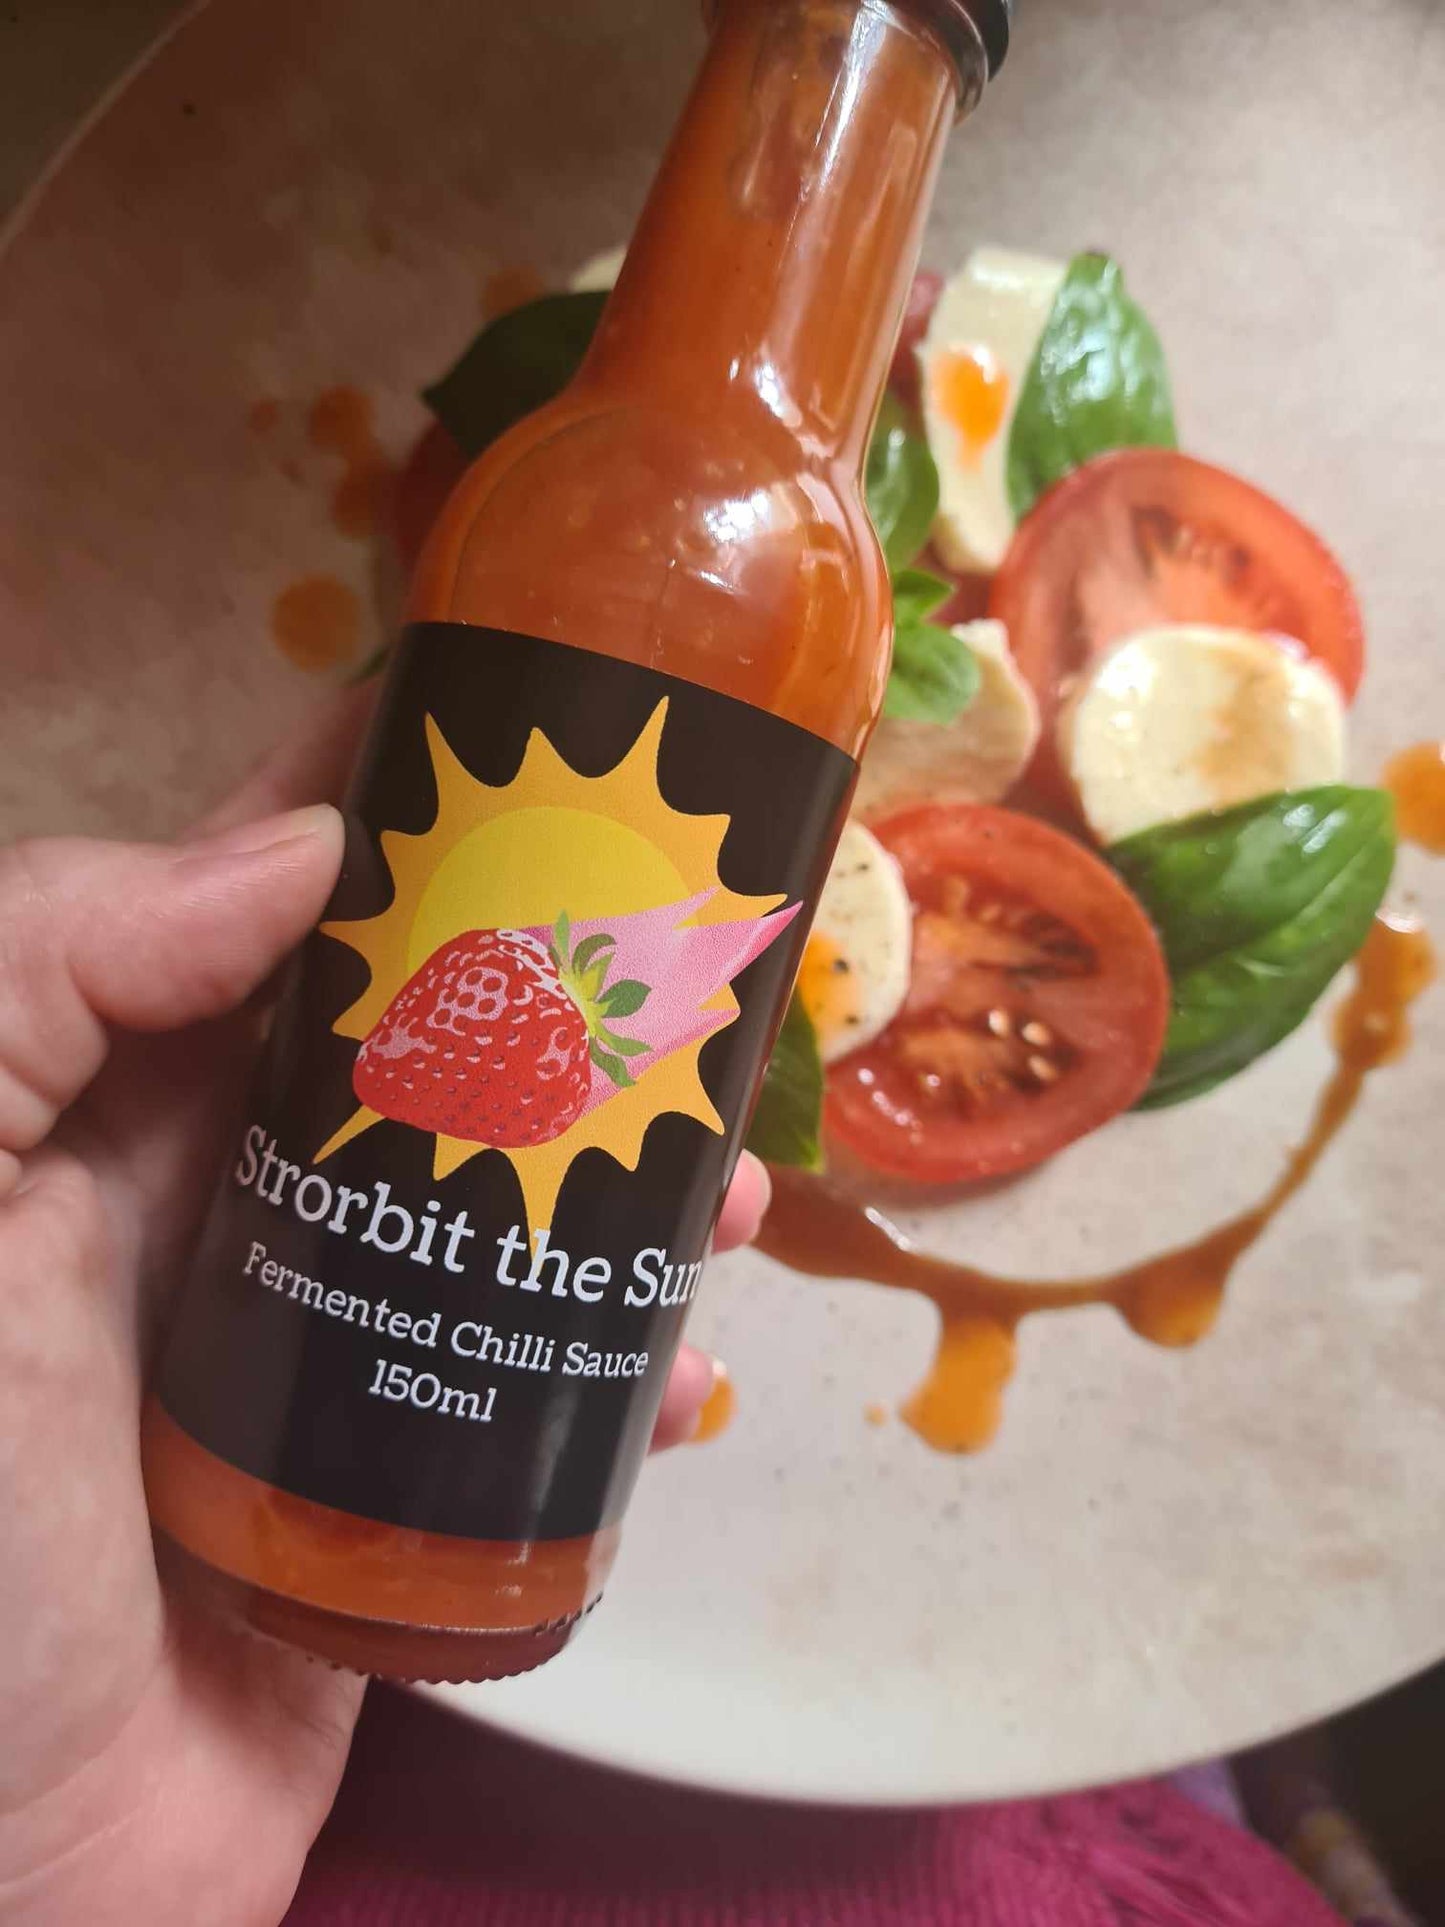 "Strorbit the Sun" Fermented Chilli Sauce 150ml